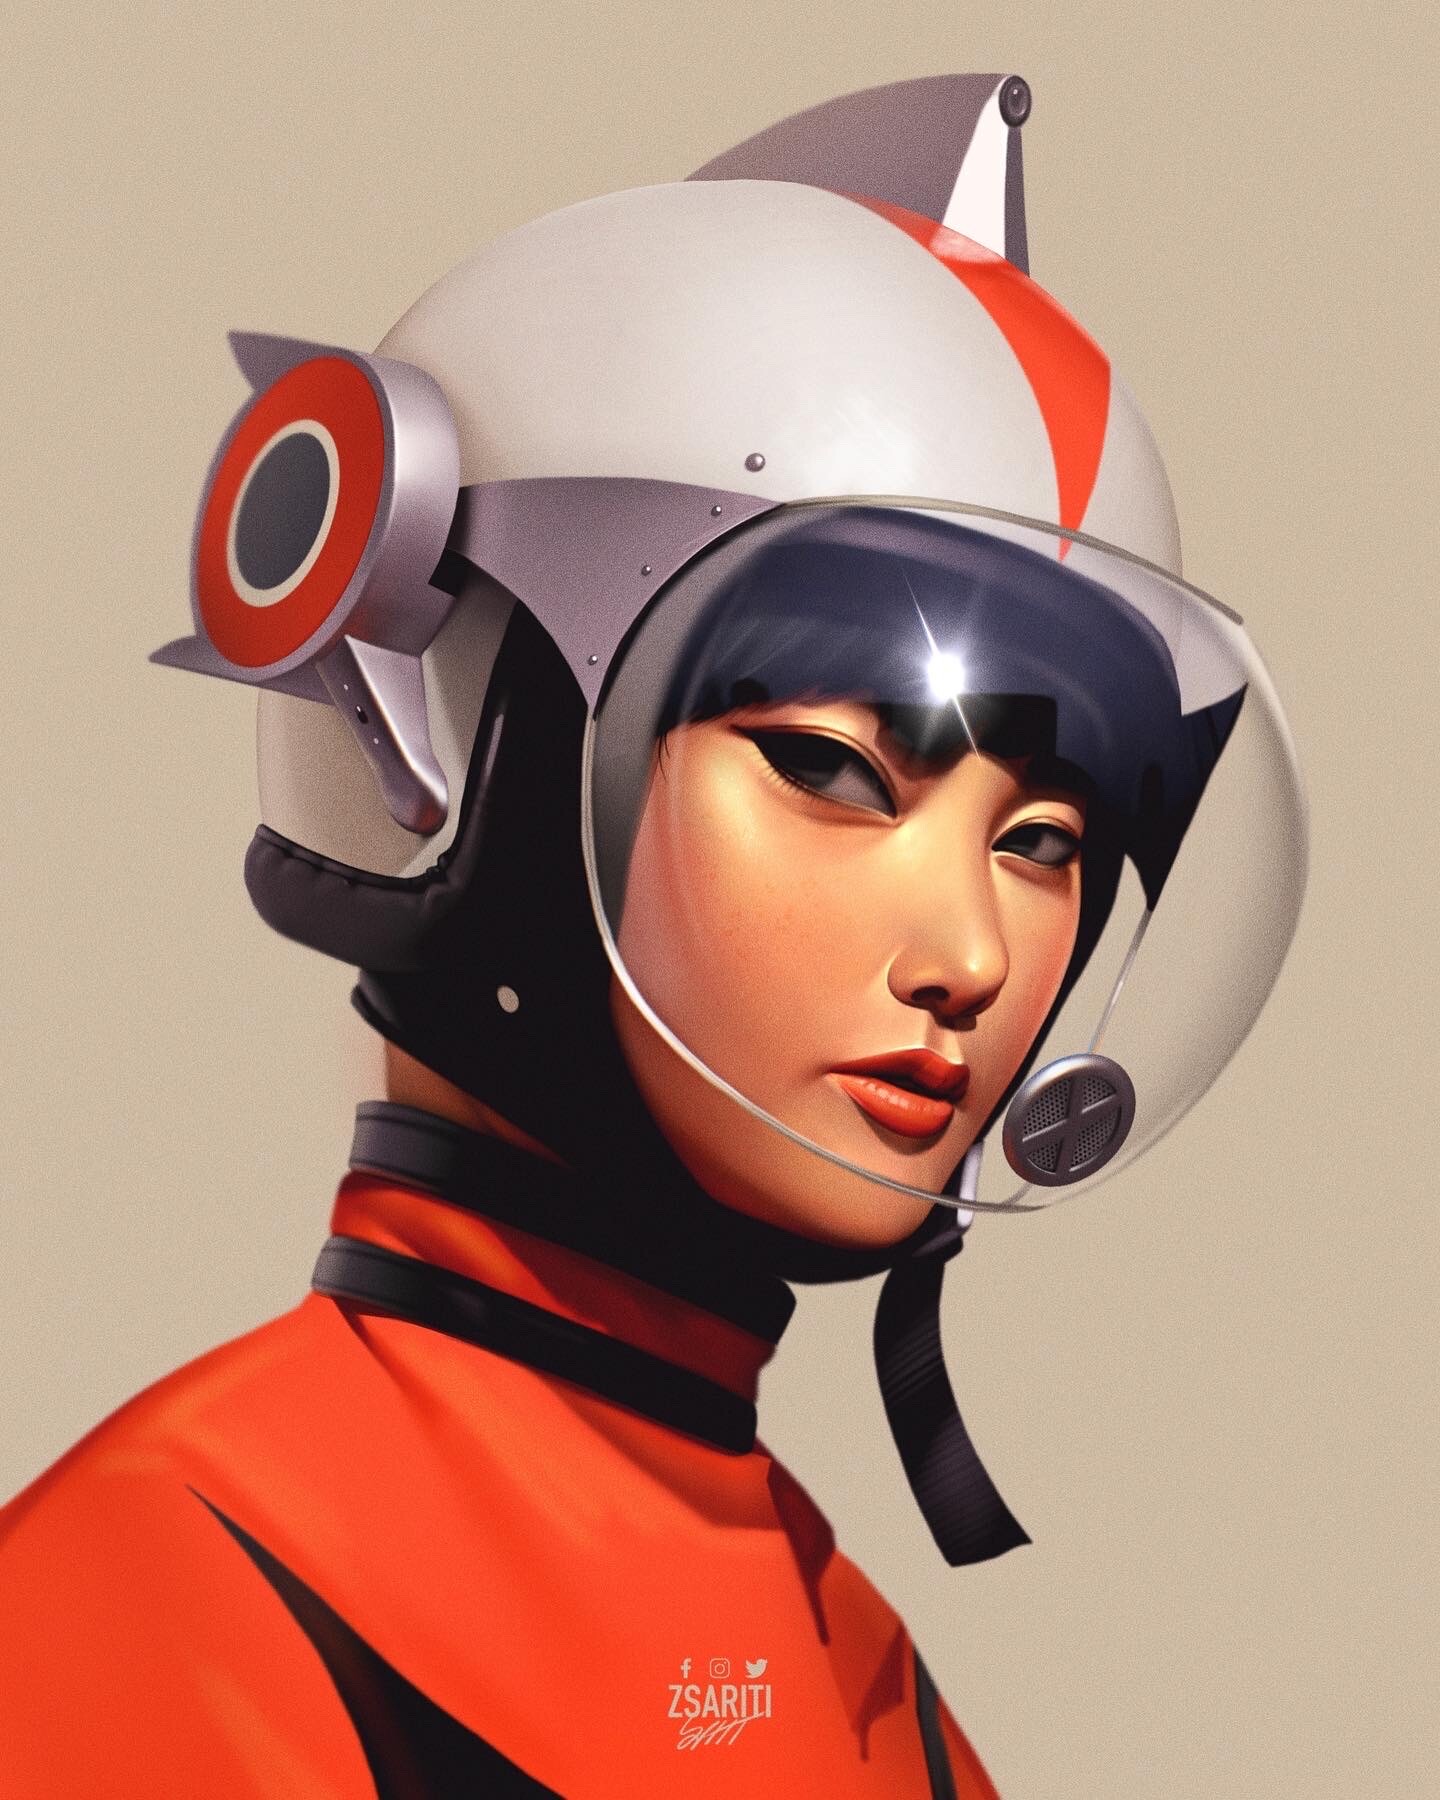 General 1440x1800 Zsariti digital art artwork illustration women portrait spacesuit Asian looking at viewer dark hair helmet